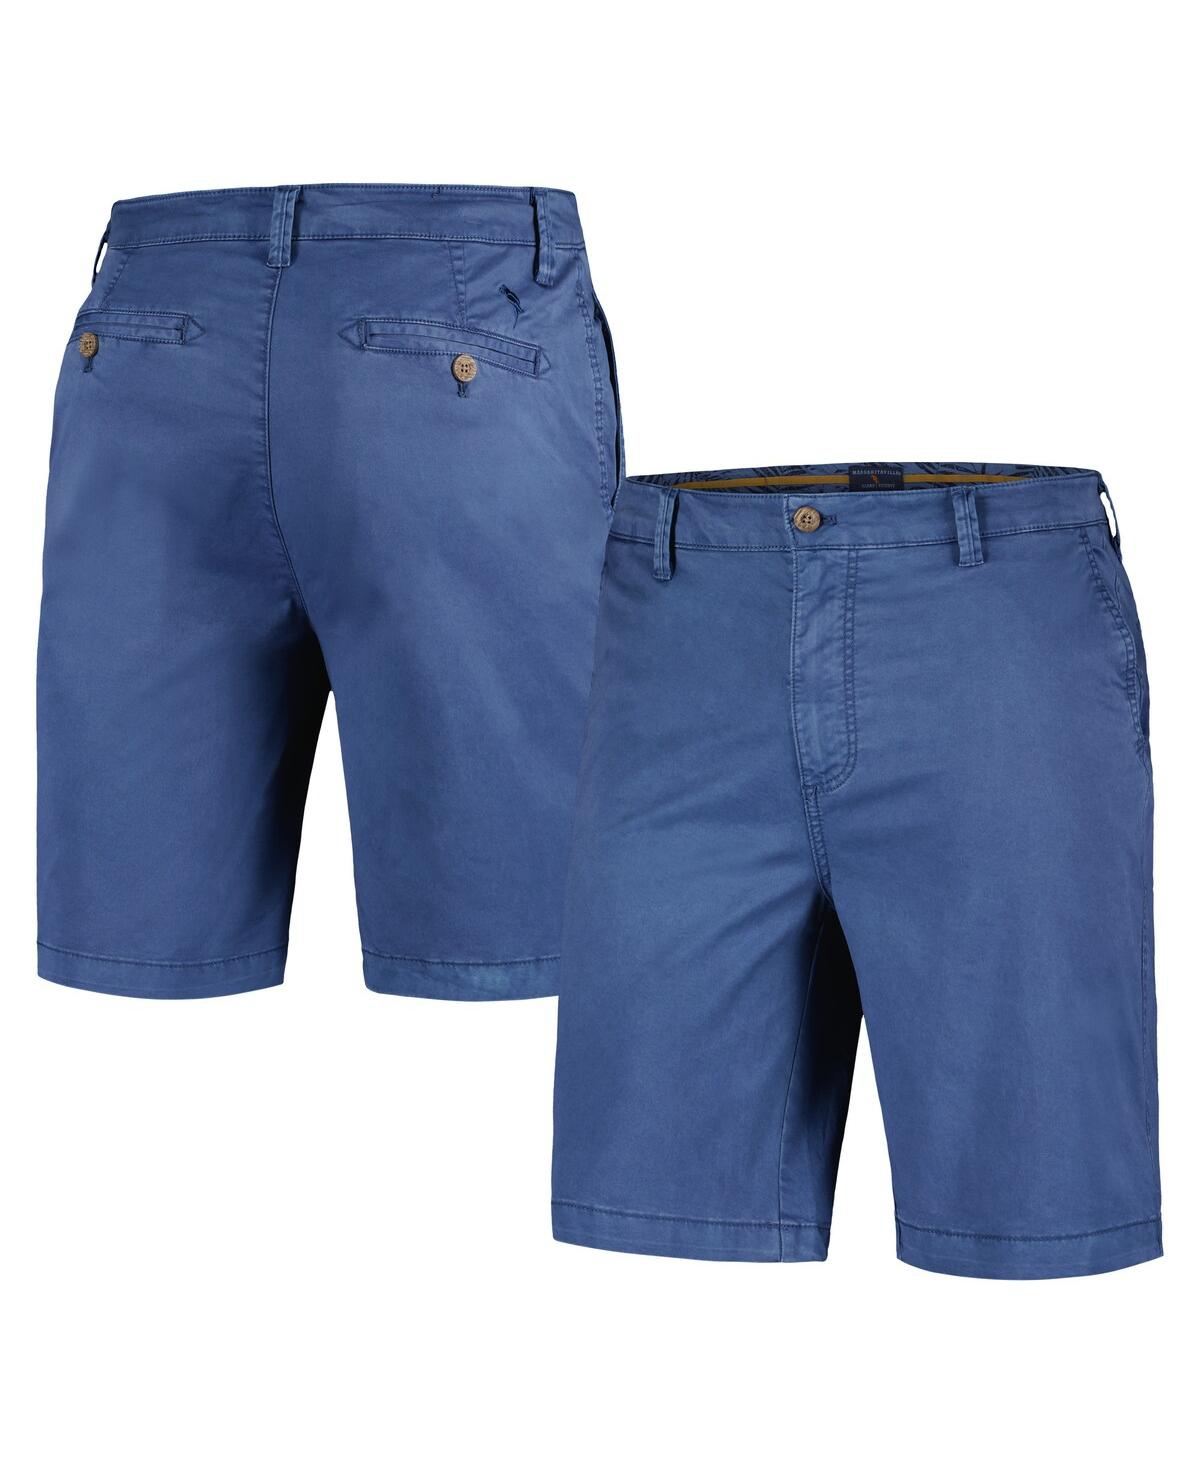 Men's Margaritaville Blue Stretch Shorts - Blue